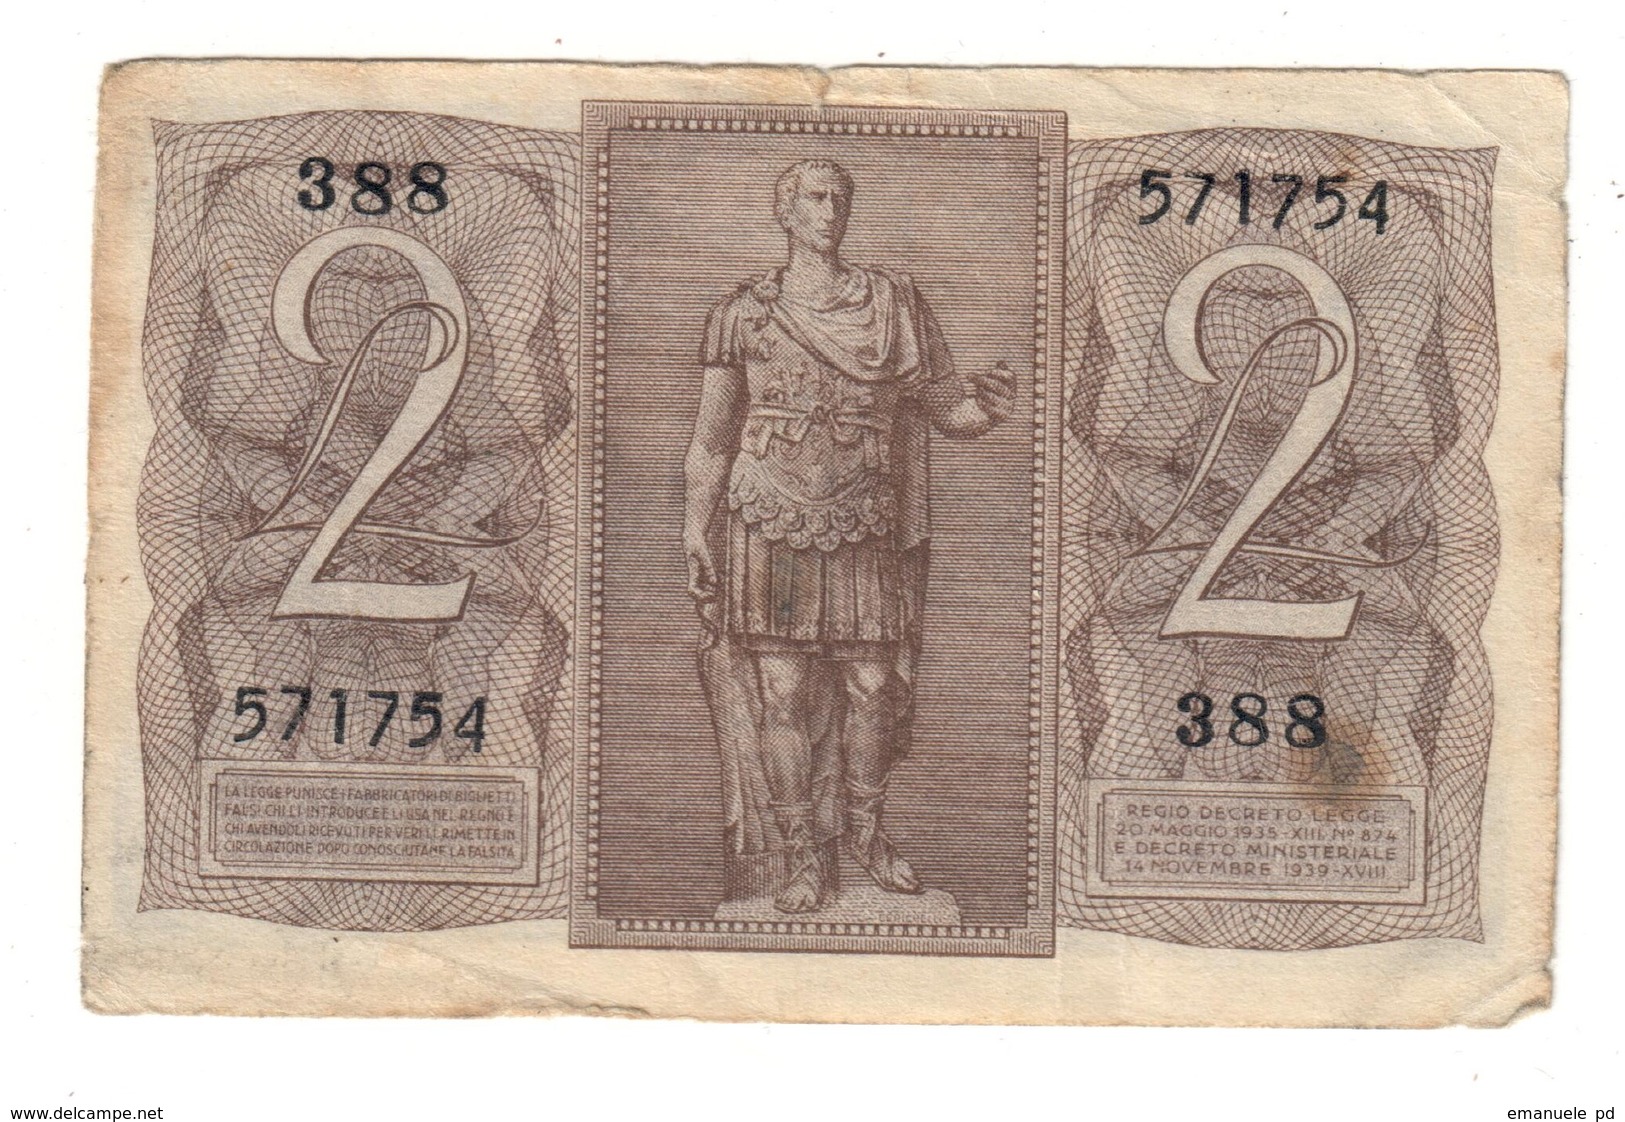 Italy 2 Lire 1939 .L. - Italia – 2 Lire